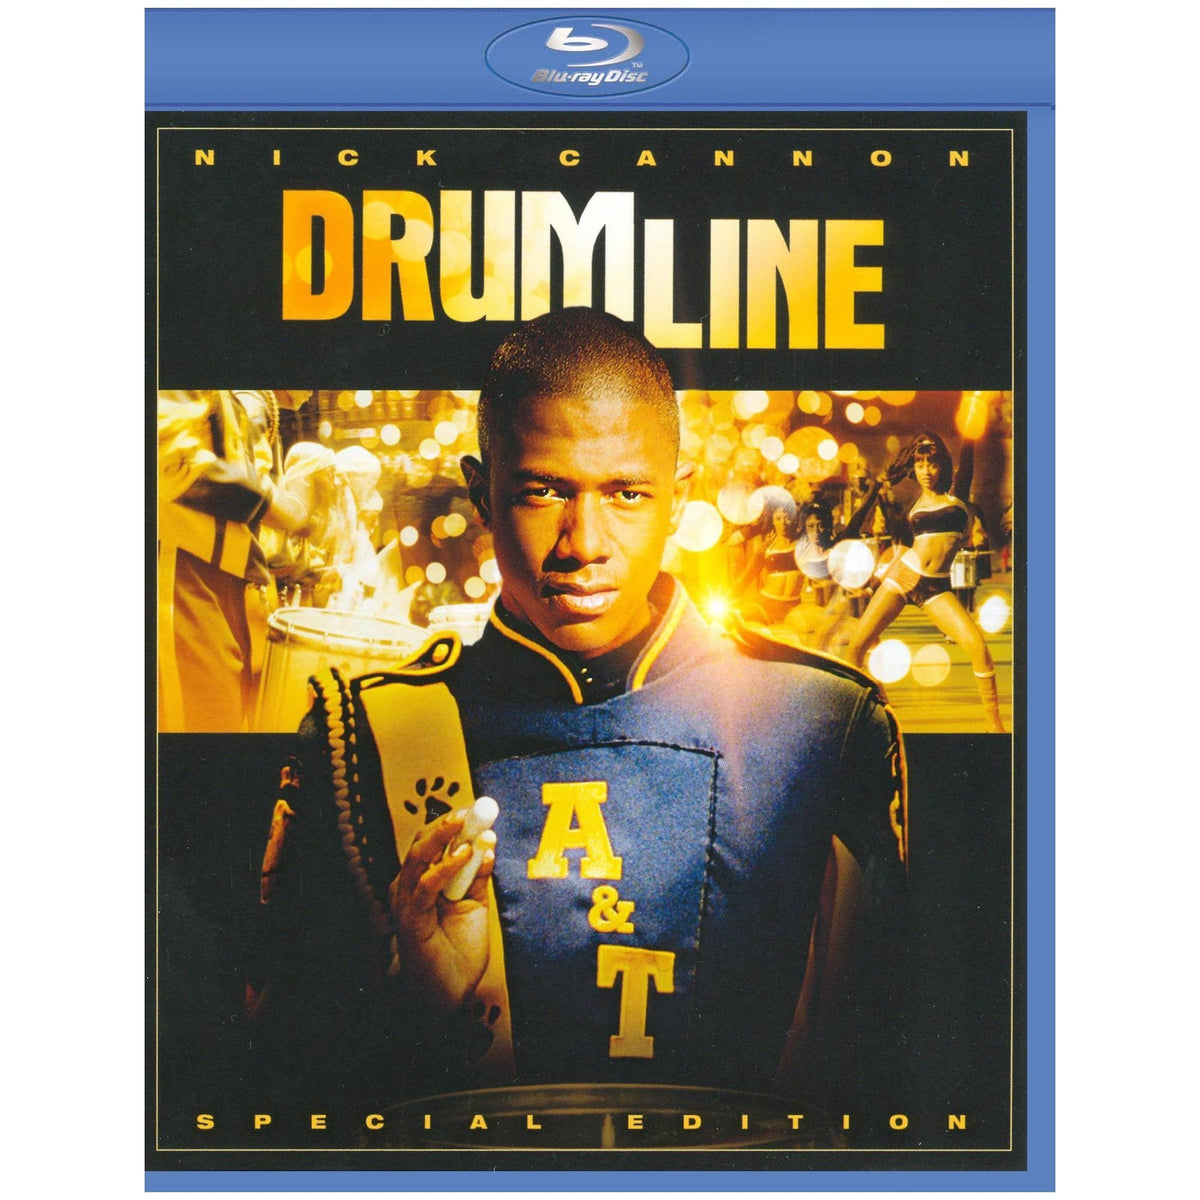 Drumline Blu-ray